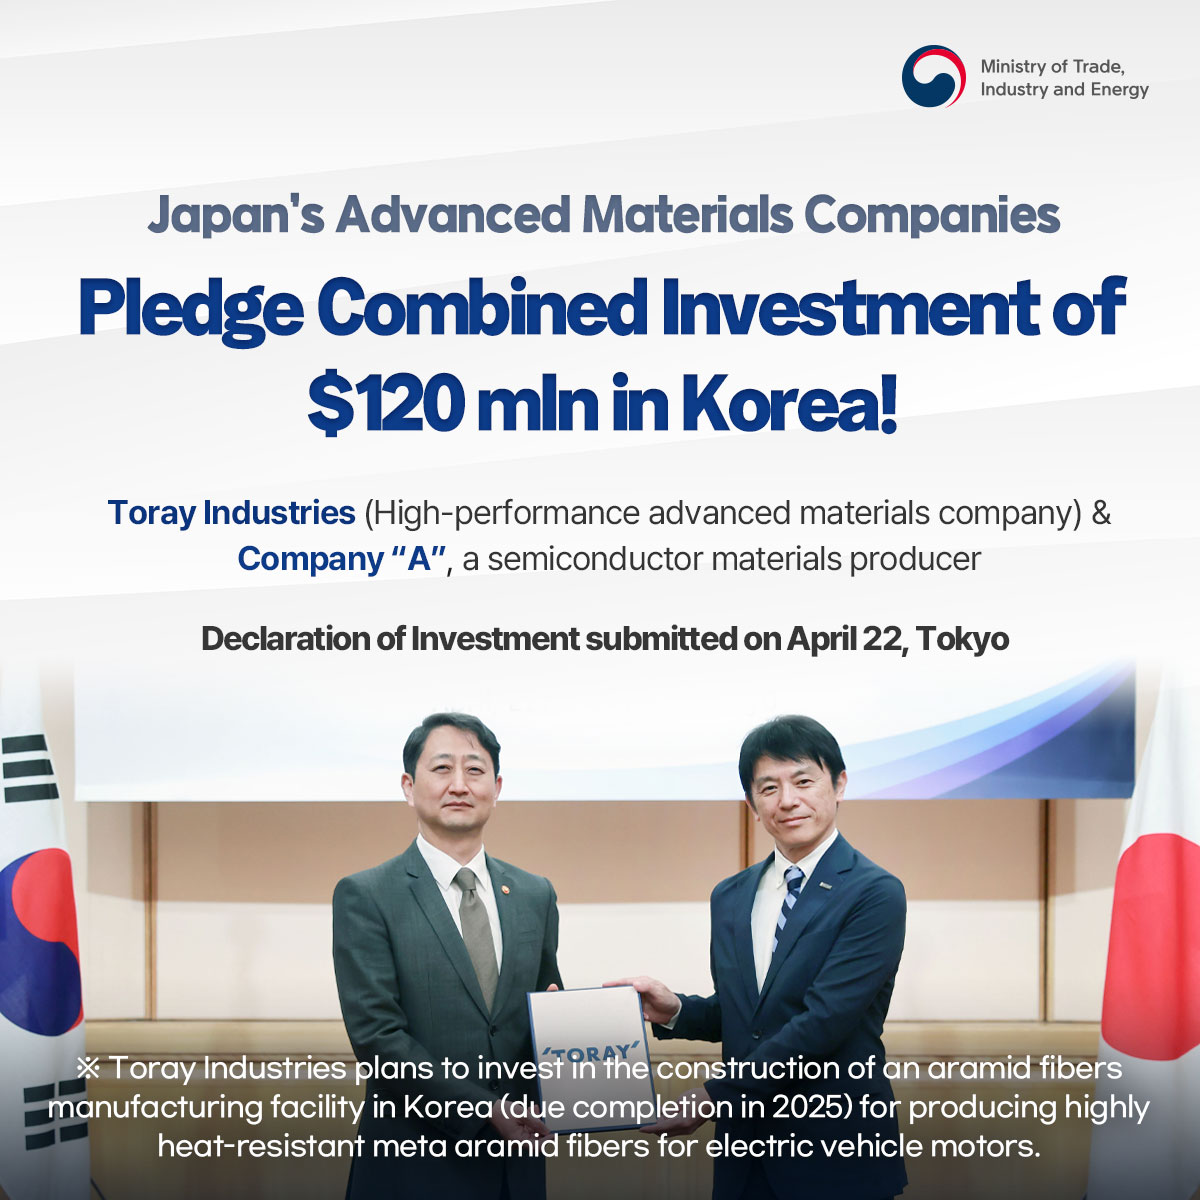 Japan's advanced materials companies pledge $120 mln investment in Korea